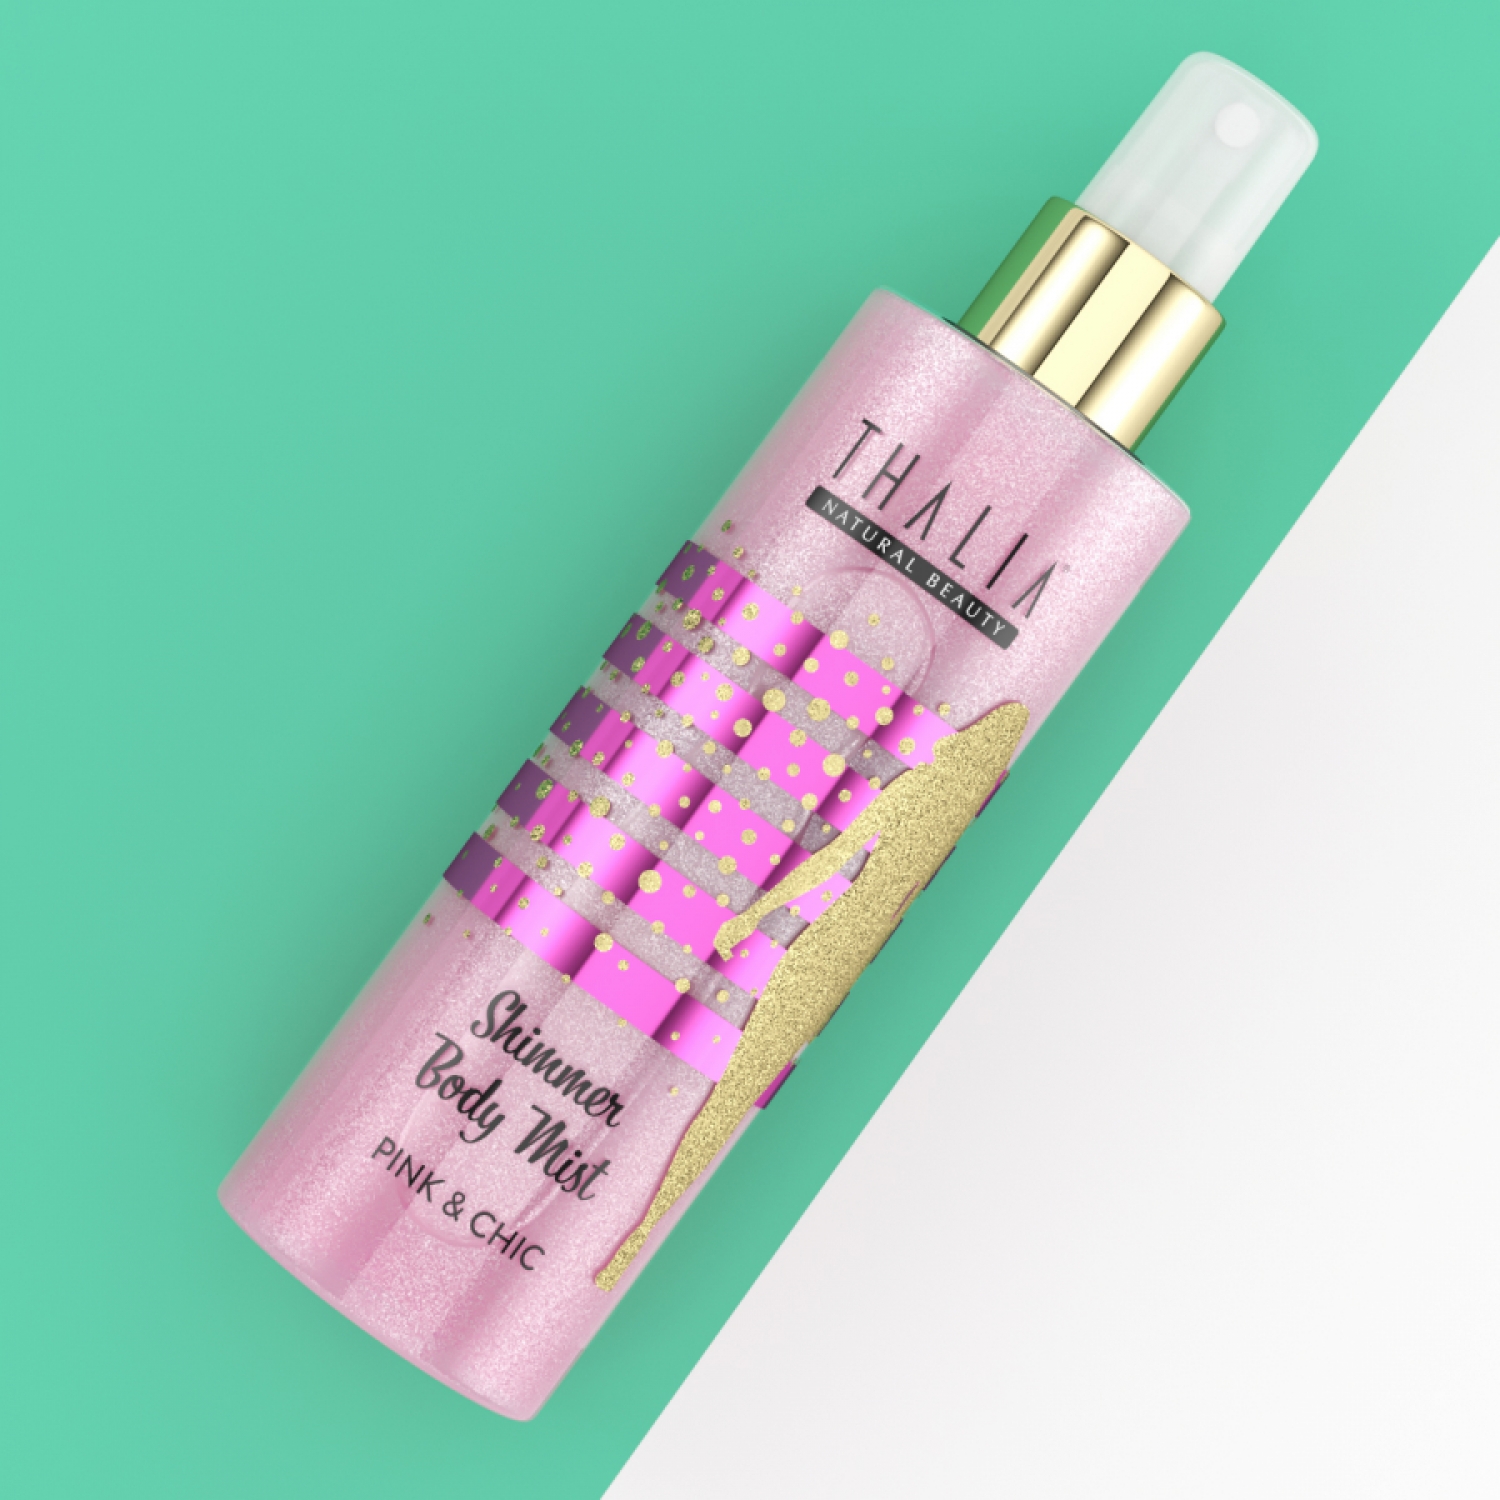 Thalia Pink&Chic Shimmer Body Mist 200 ml